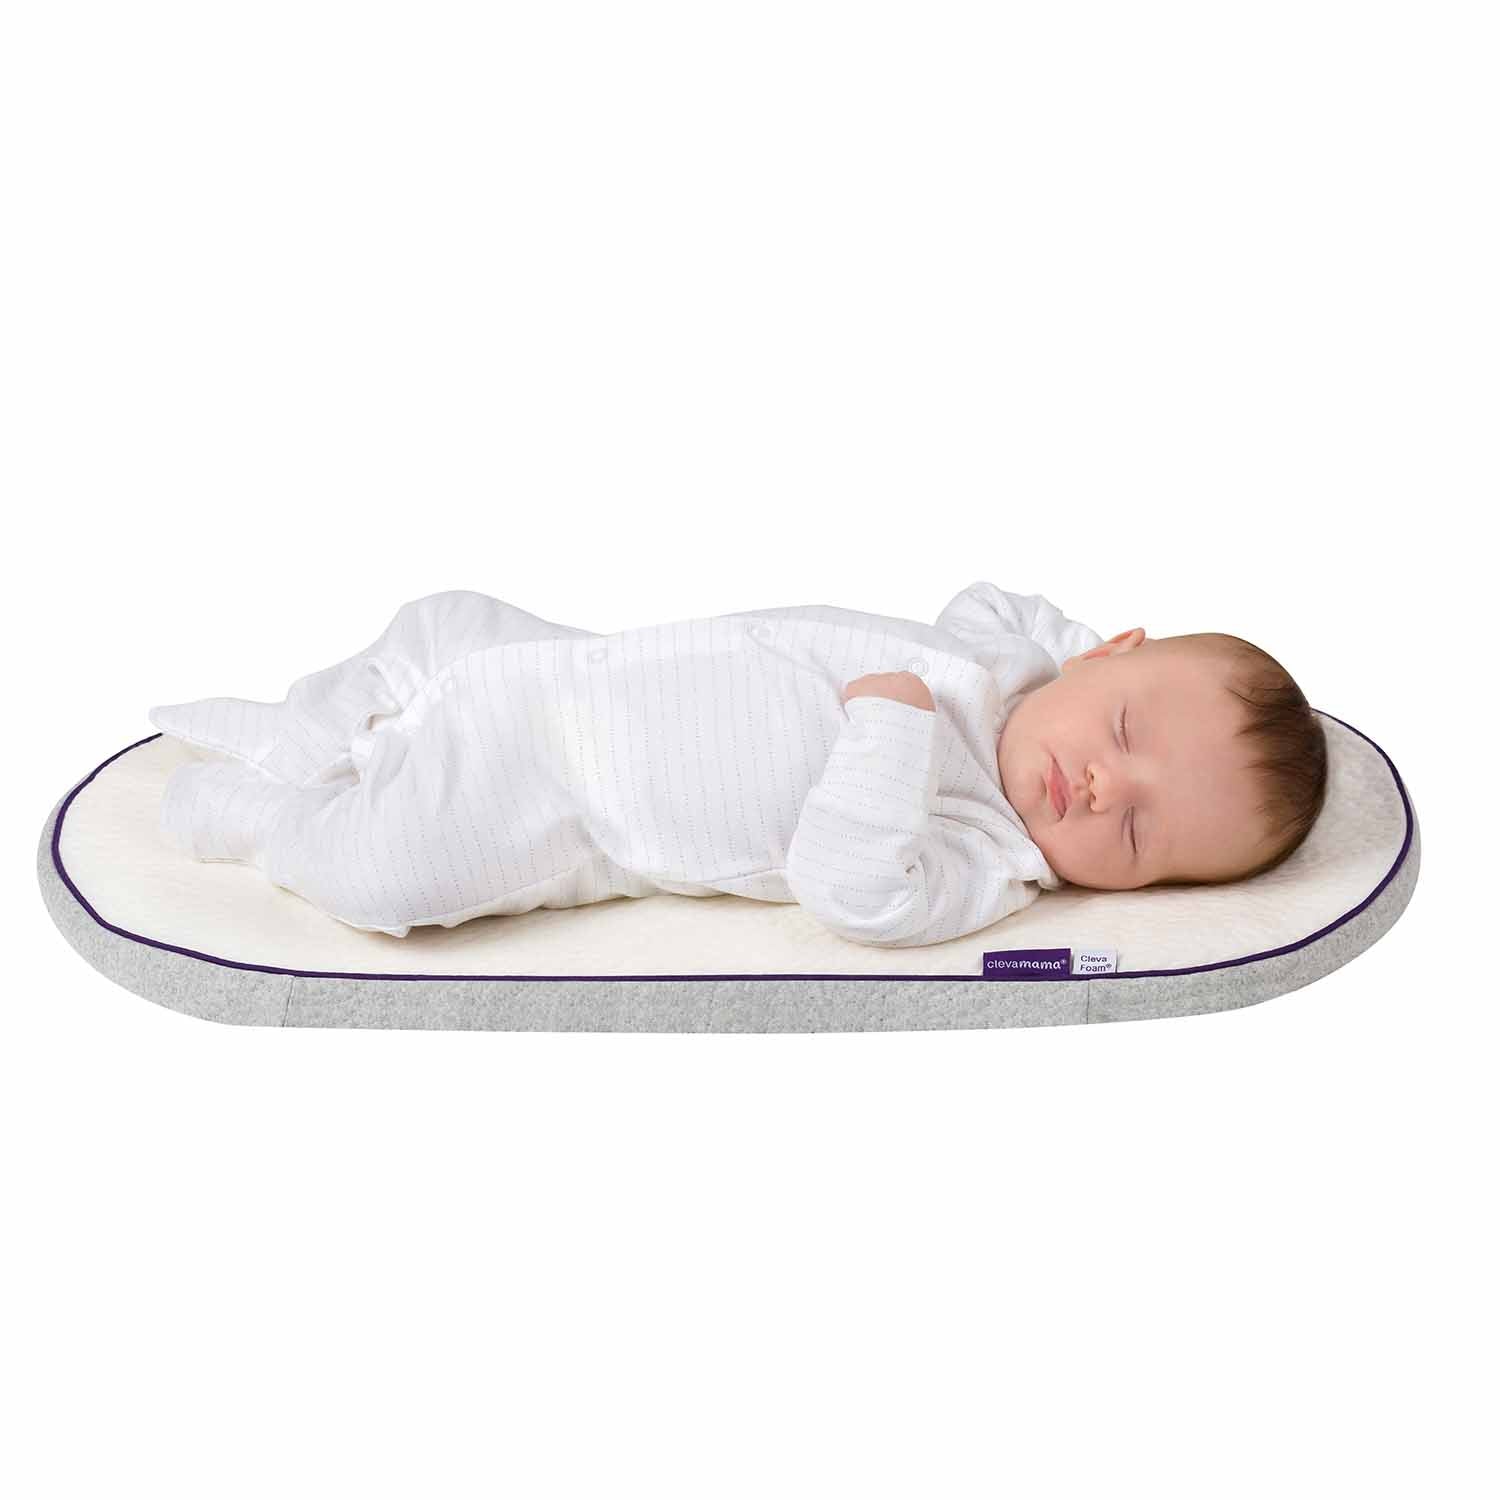 Baby matras met ClevaFoam® | mozeswieg matras | wandelwagen matras